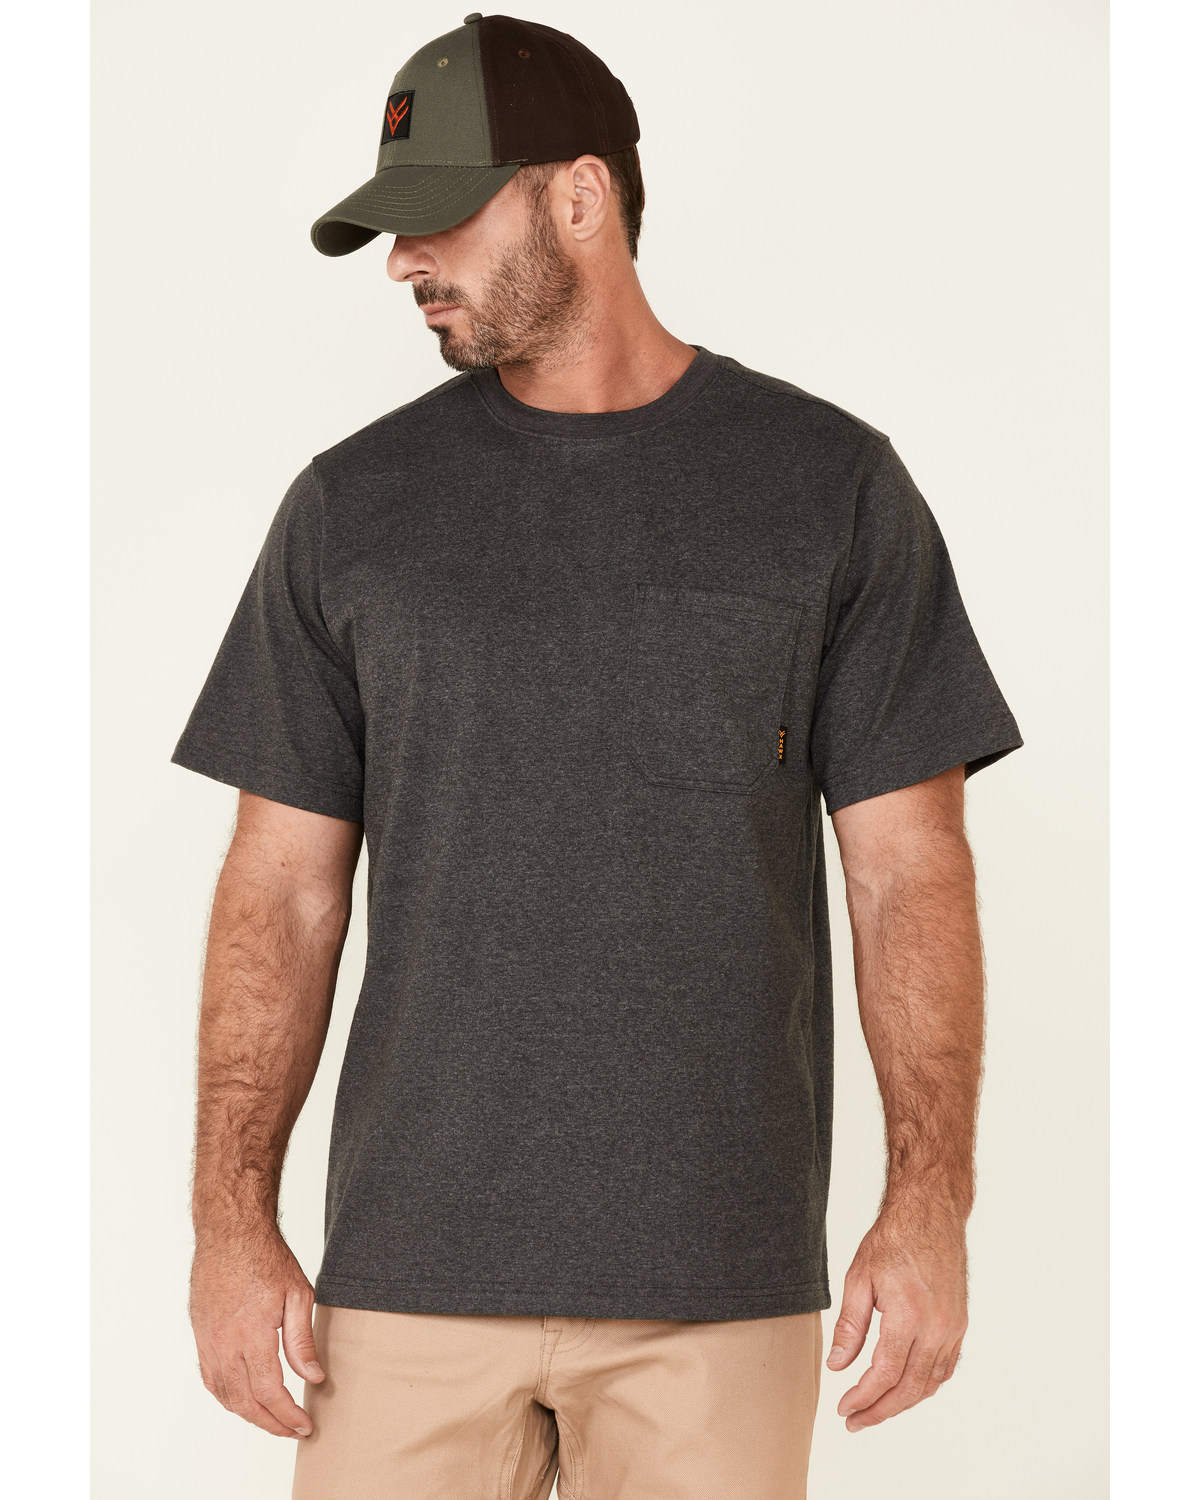 Hawx Men's Solid Charcoal Forge Short Sleeve Work Pocket T-Shirt